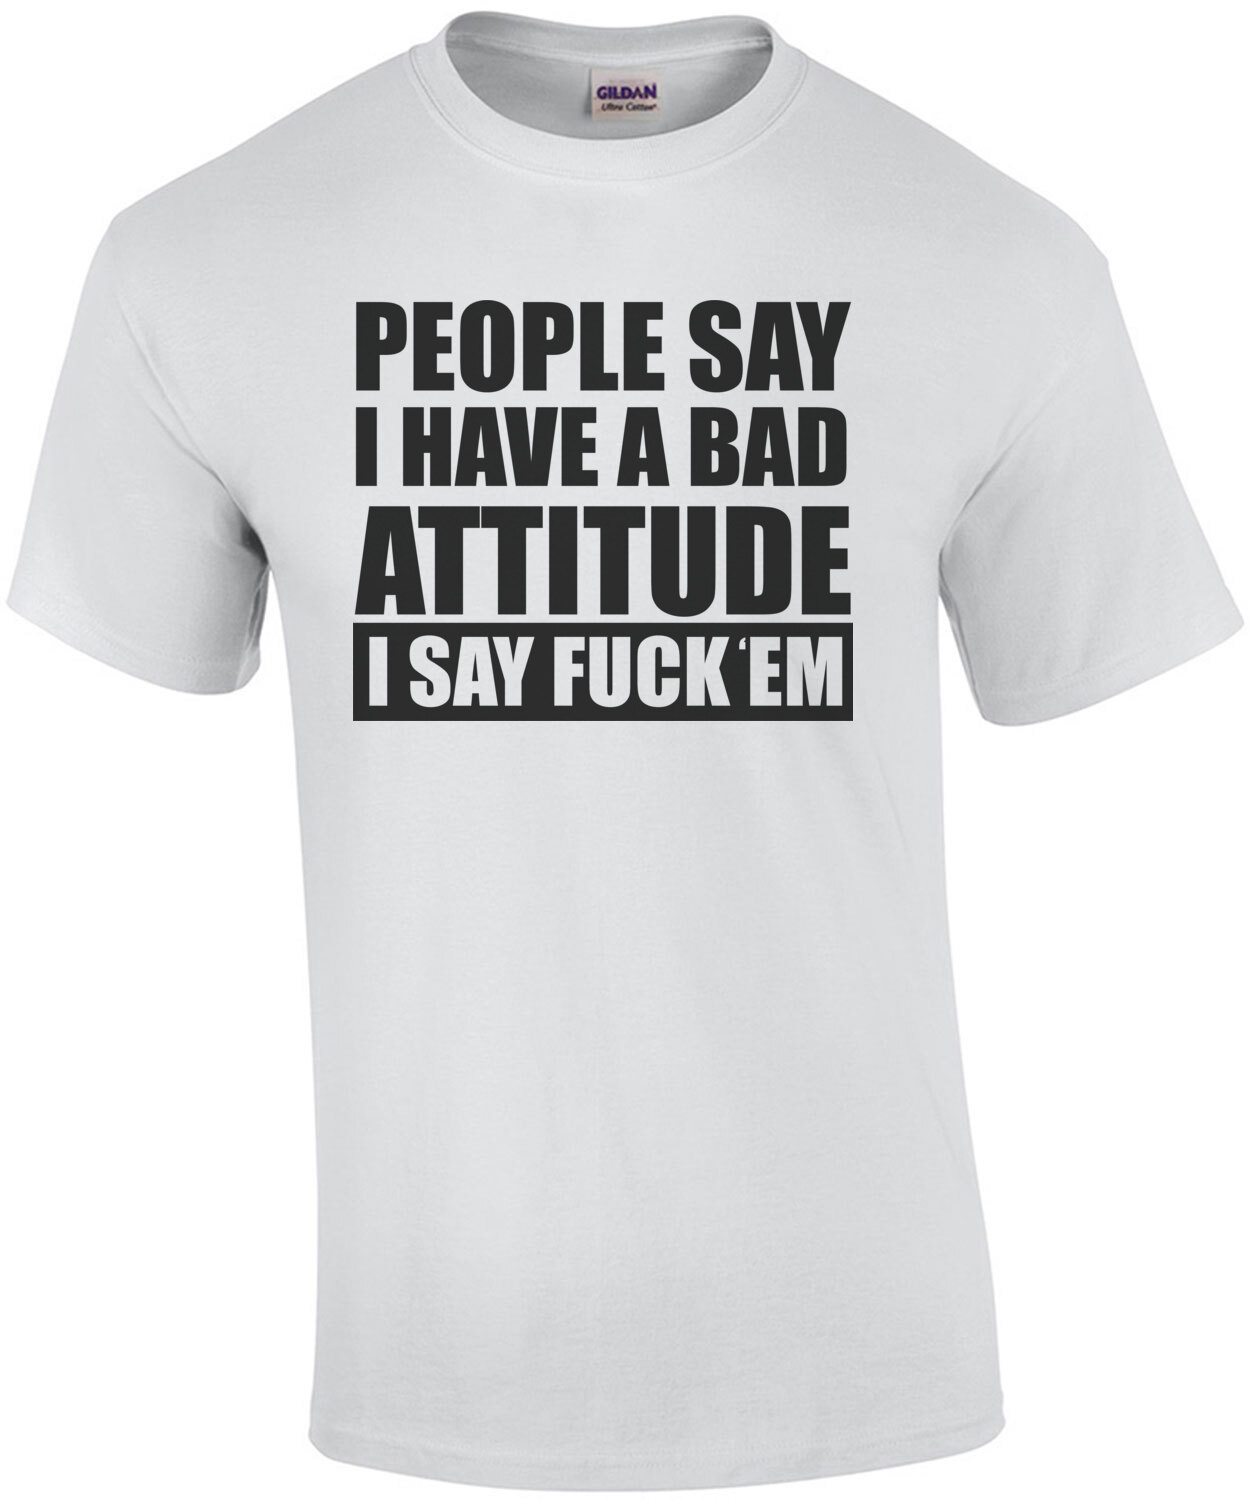 People say I have a bad attitude I fuck 'em - funny rude shirt